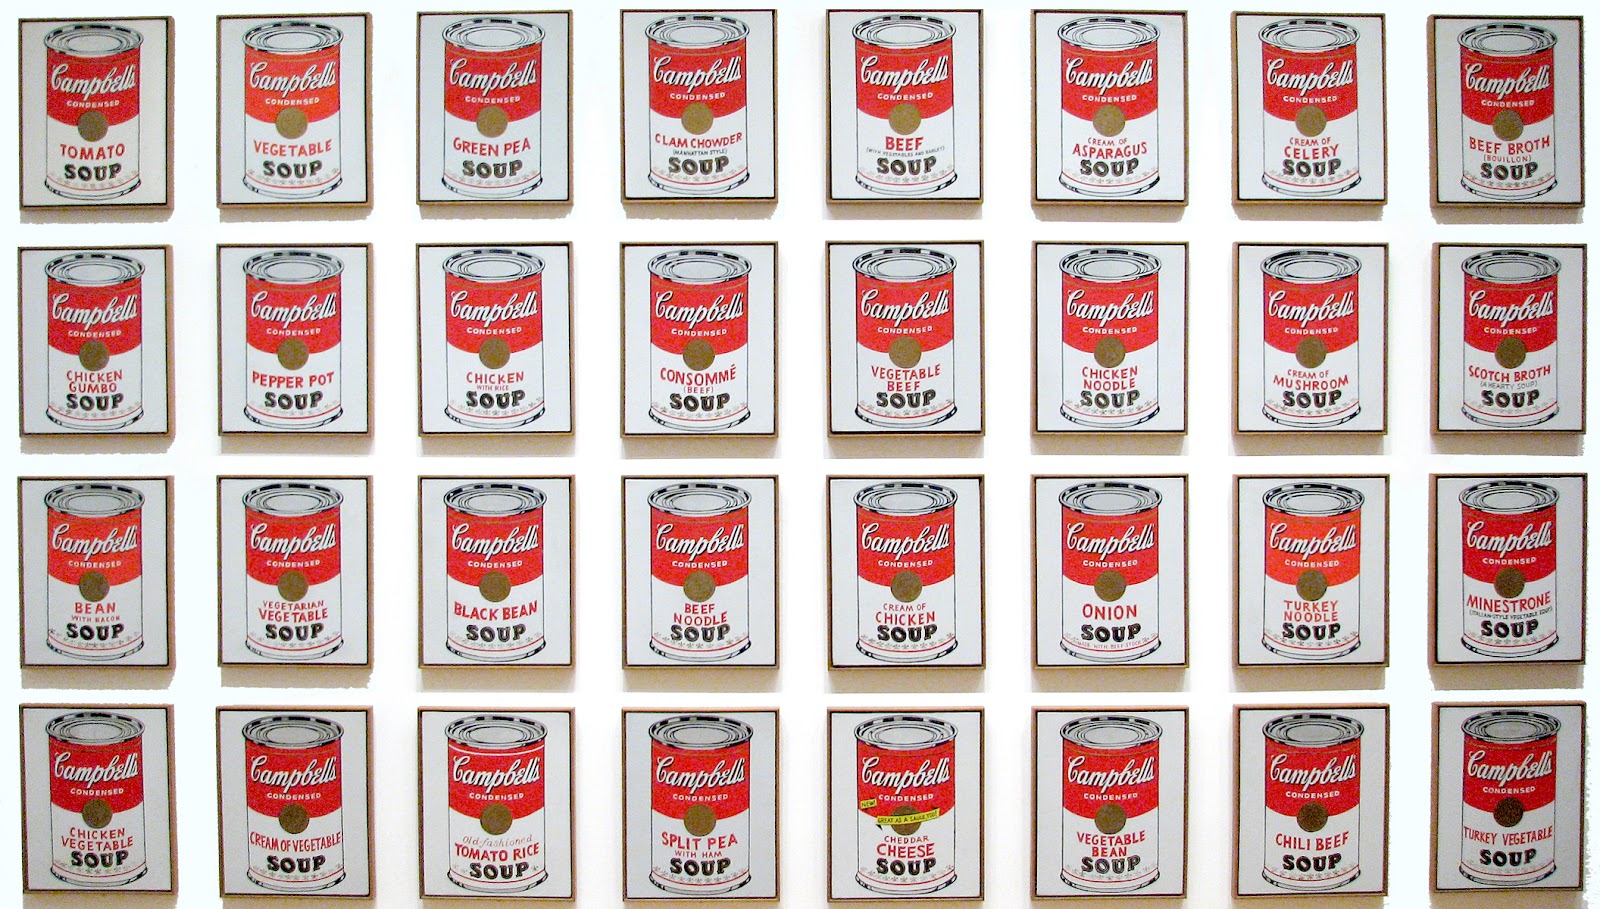 Las Latas de Sopa Campbell by Andy Warhol - 1962 Museum of Modern Art